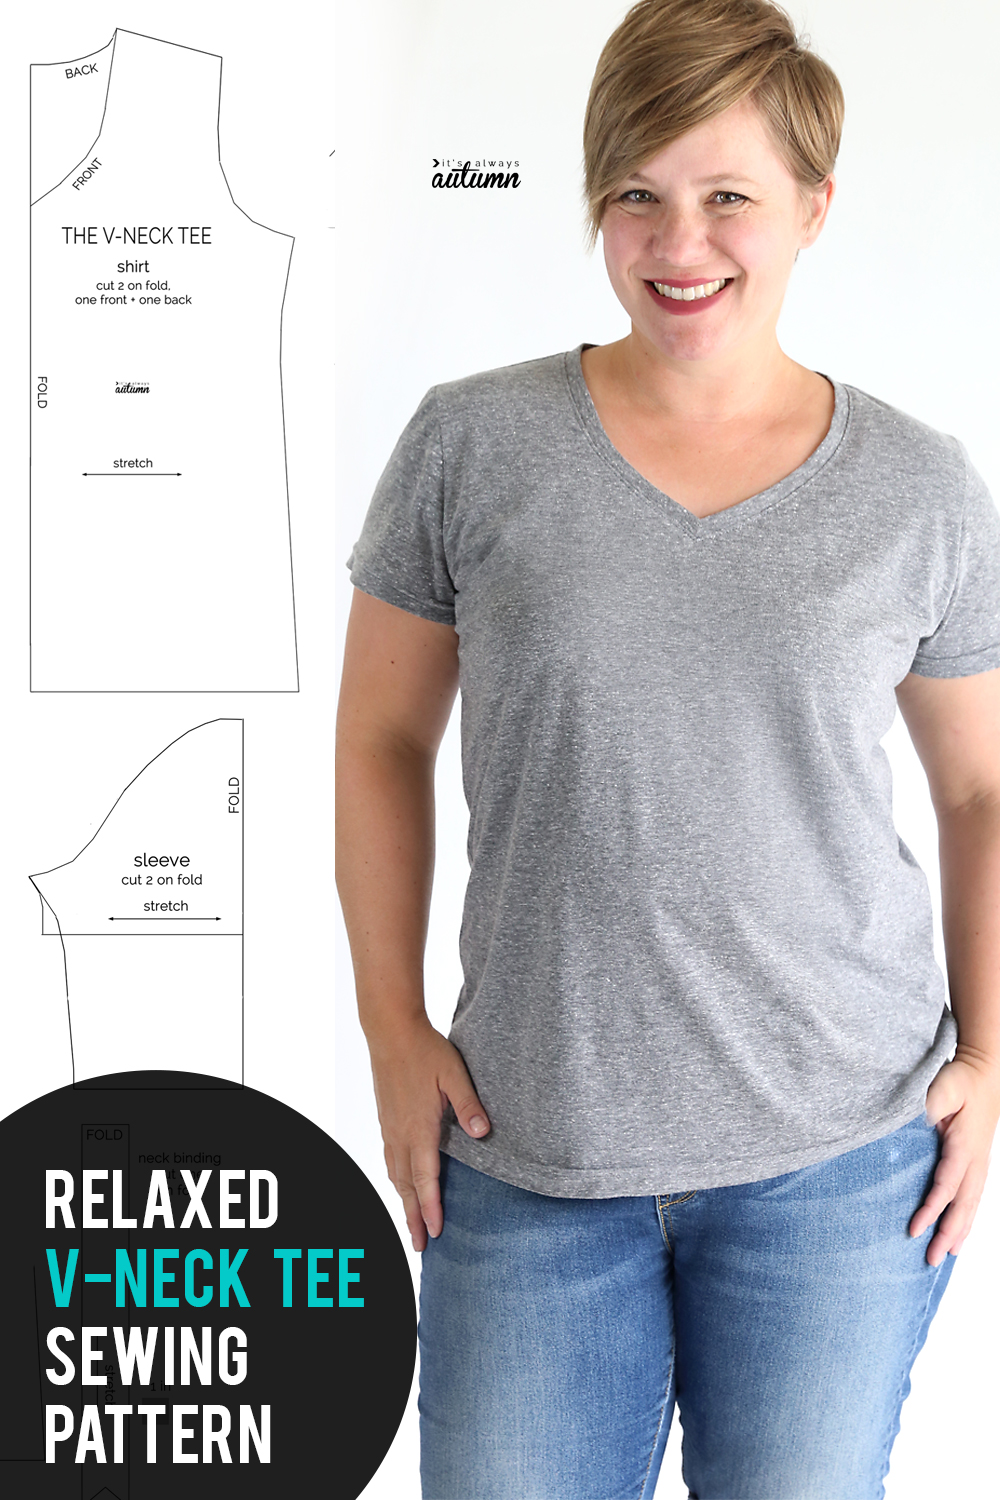 Easy Cut Out Shirts  DIY T-Shirt Cutting Tutorials, No Sewing 